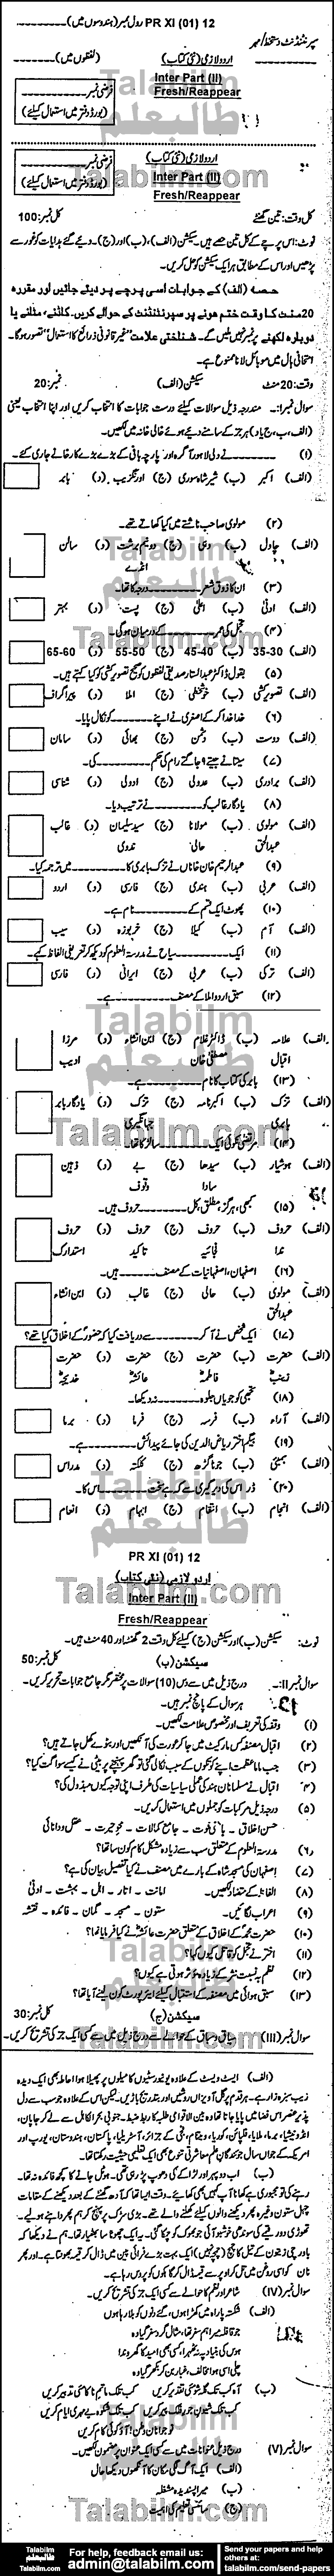 Urdu 0 past paper for Group-I 2012